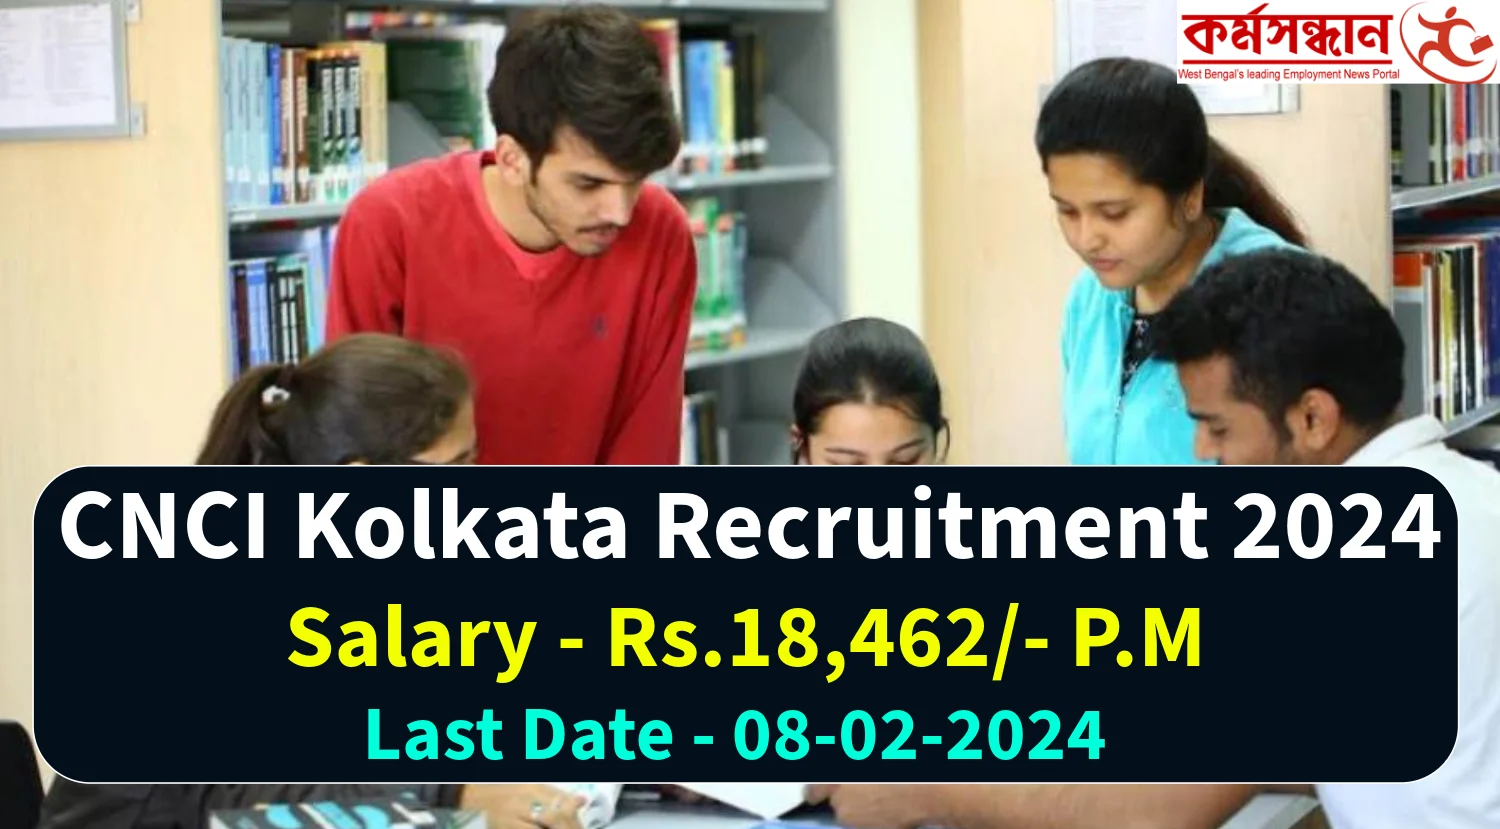 CNCI Kolkata PCC Recruitment 2024 through BECIL